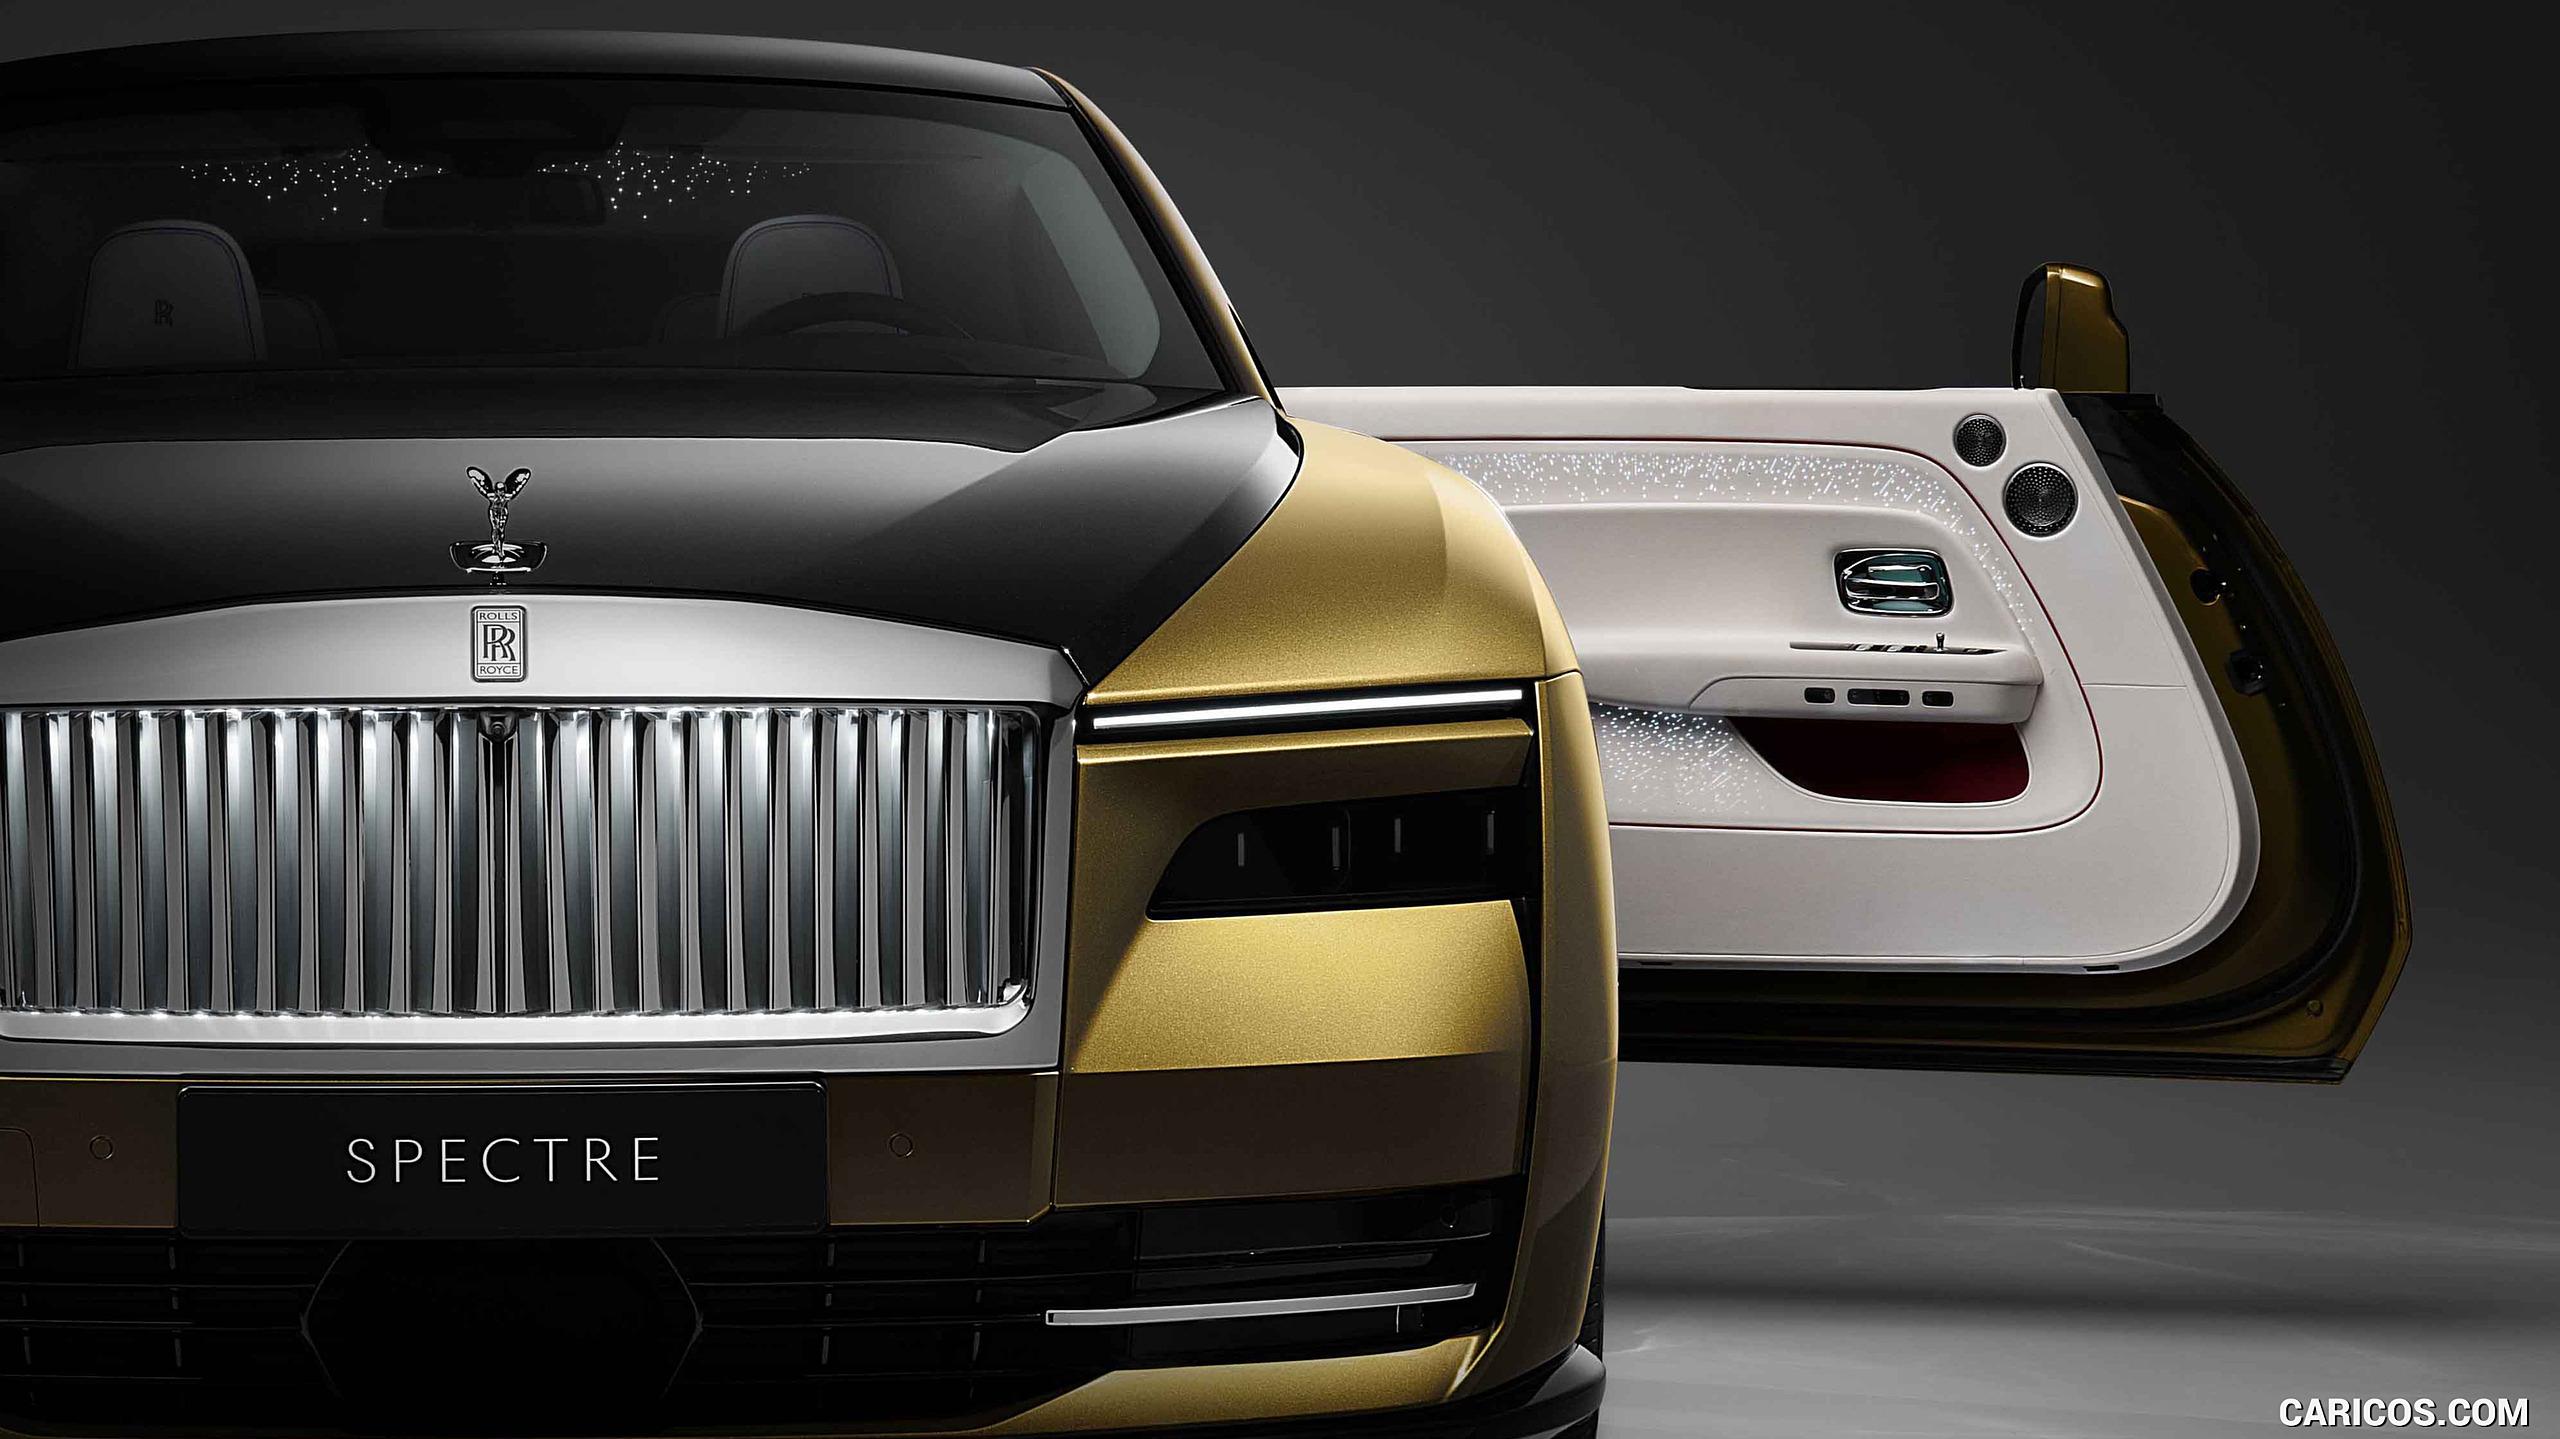 Rolls Royce Spectre Caricos